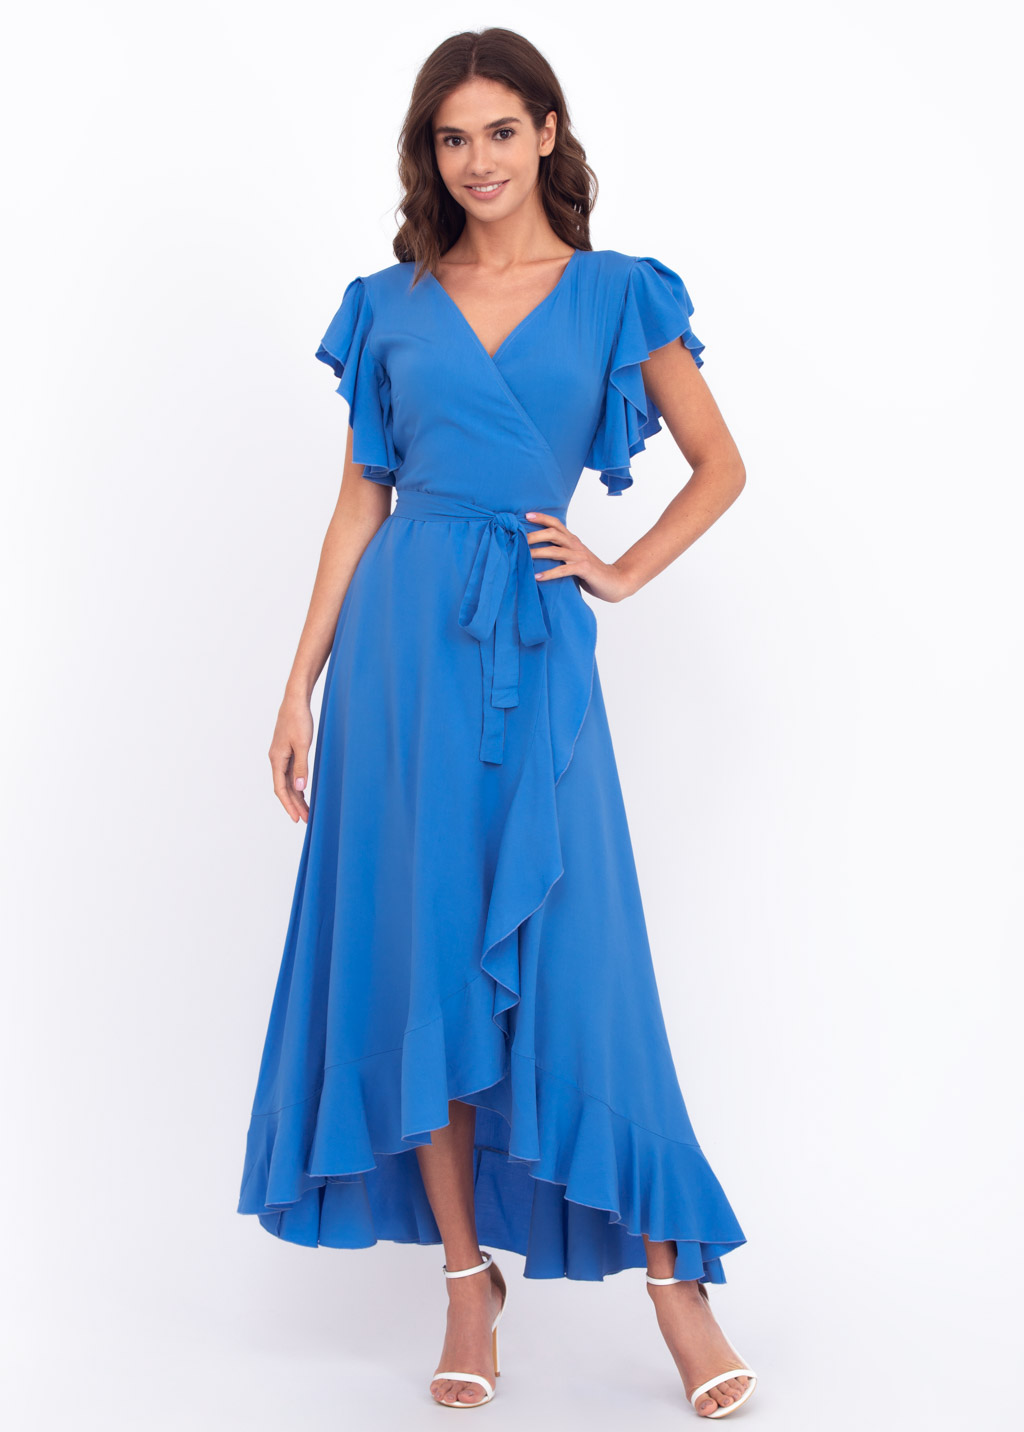 Indigo blue romantic wrap around dress